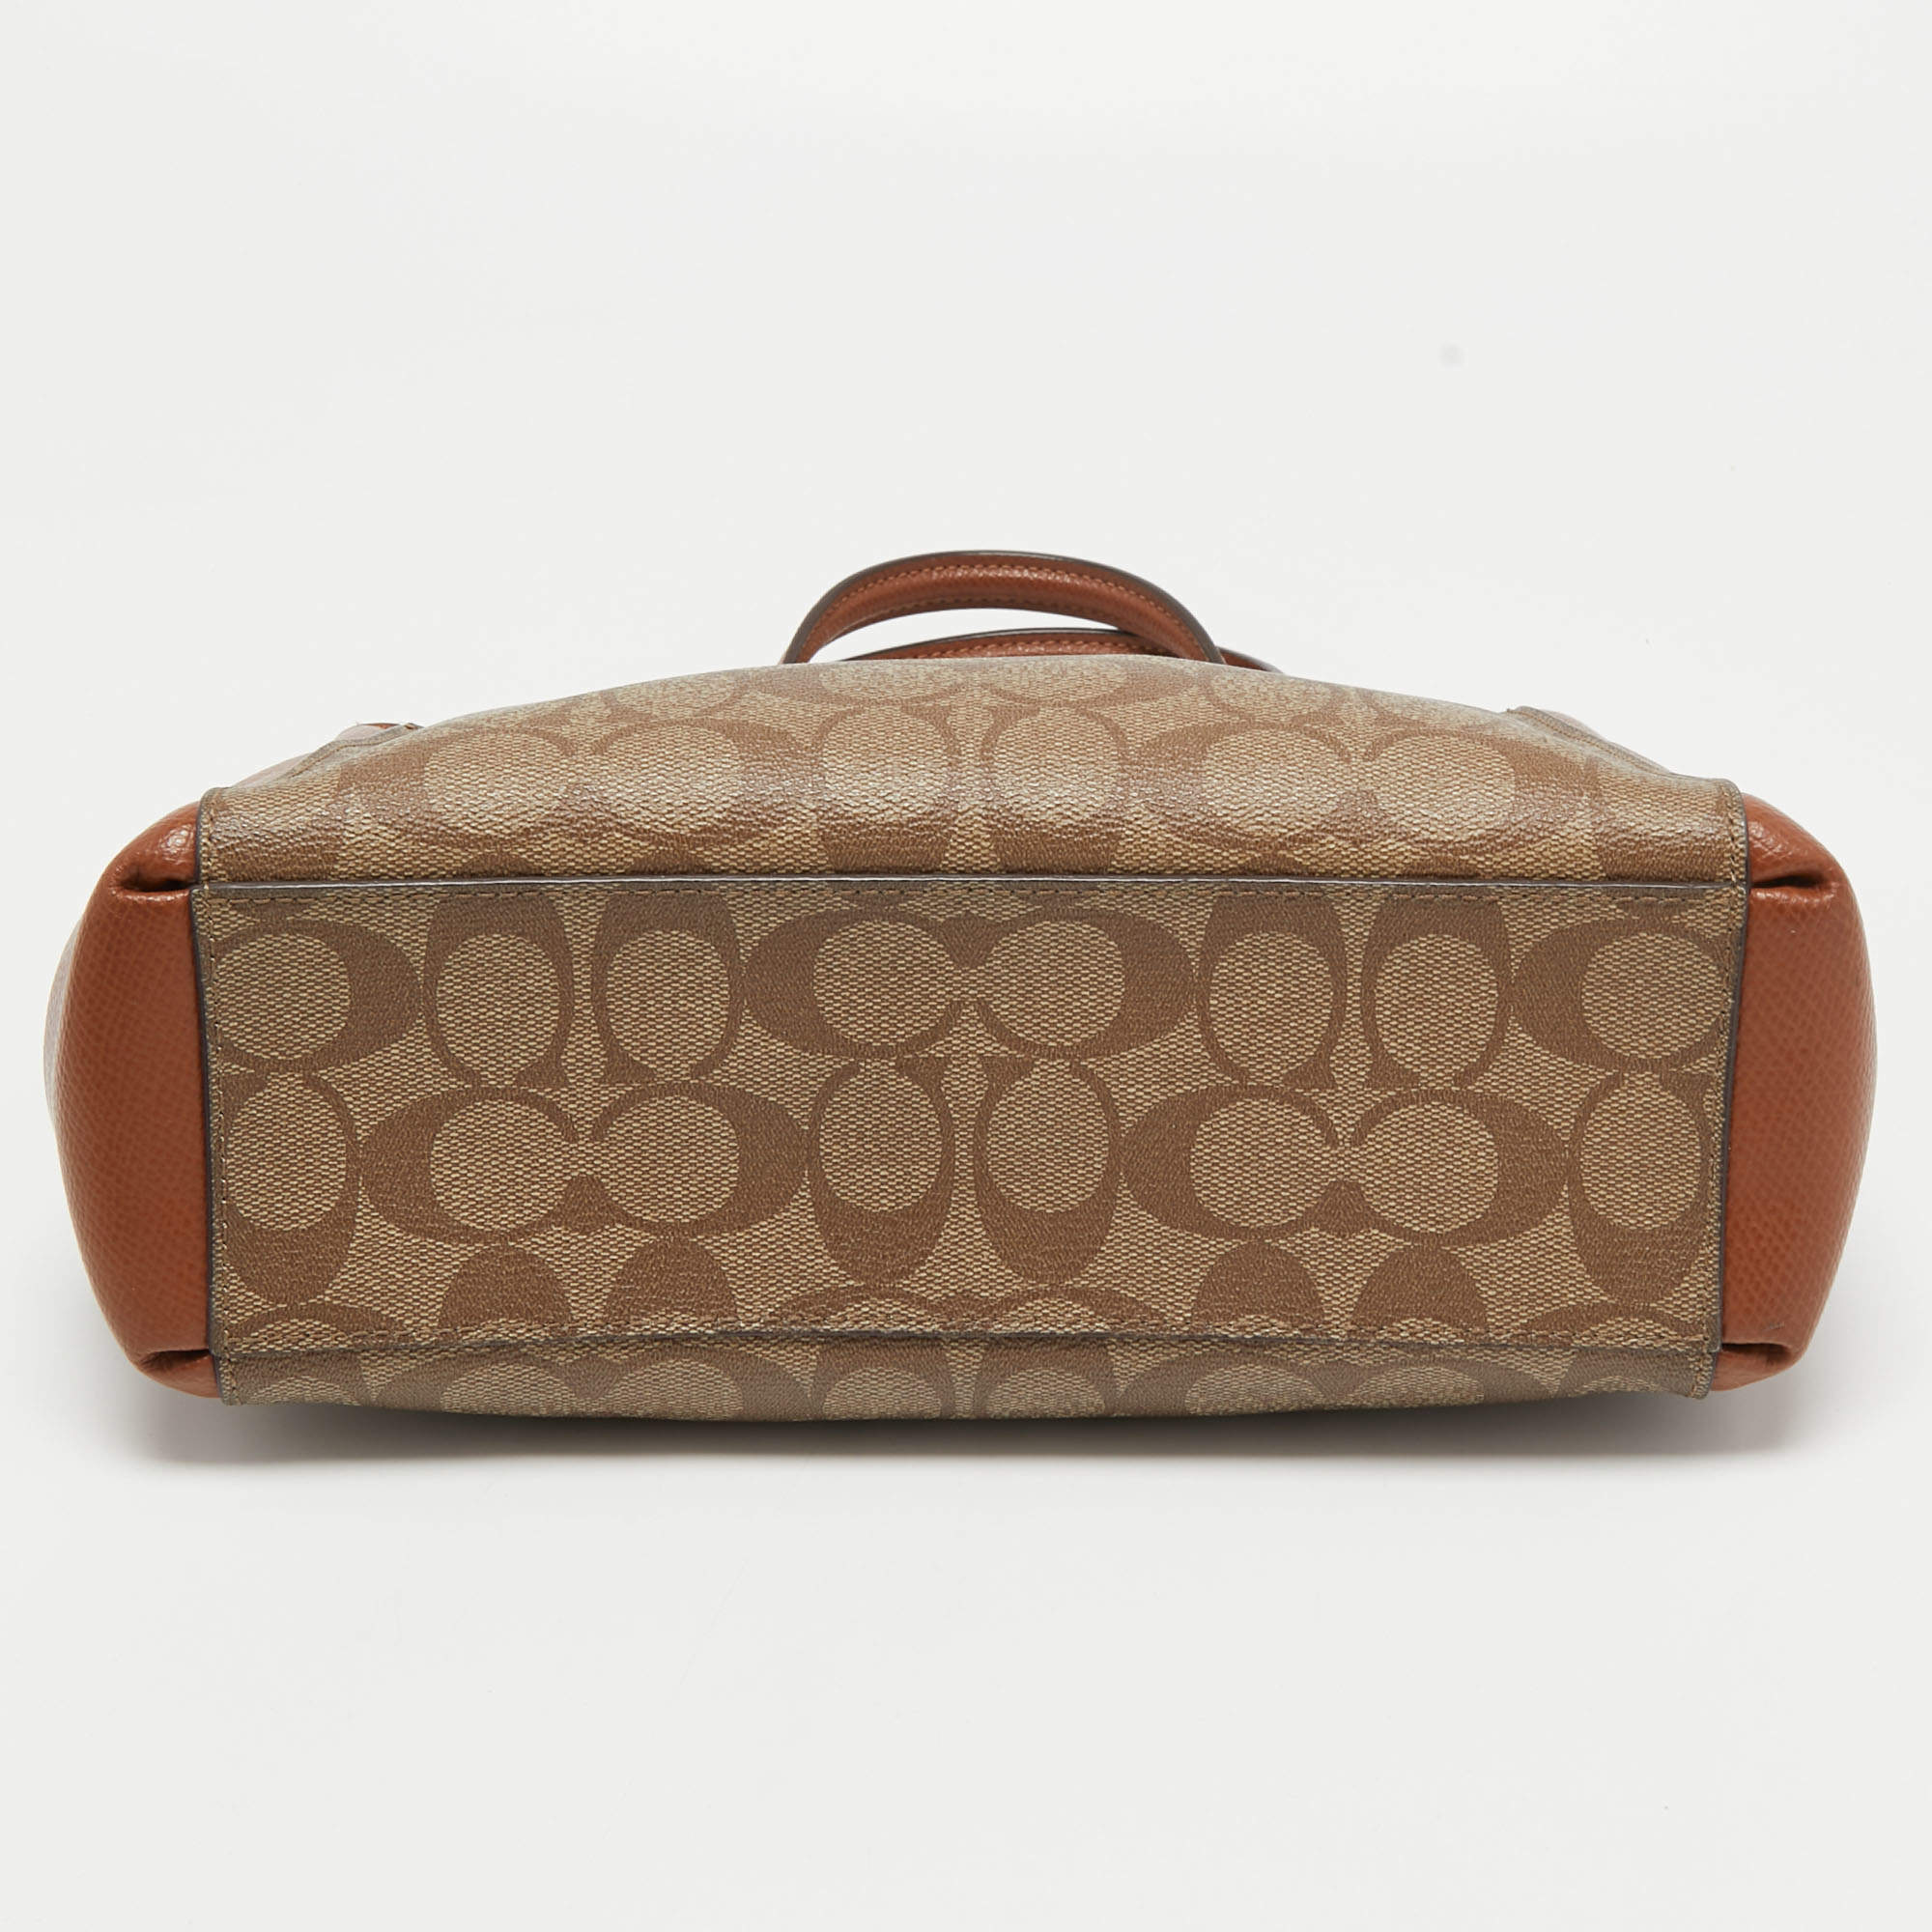 Coach White Brown Pink Tan Leather Canvas Small Purse Clutch Satchel Handbag